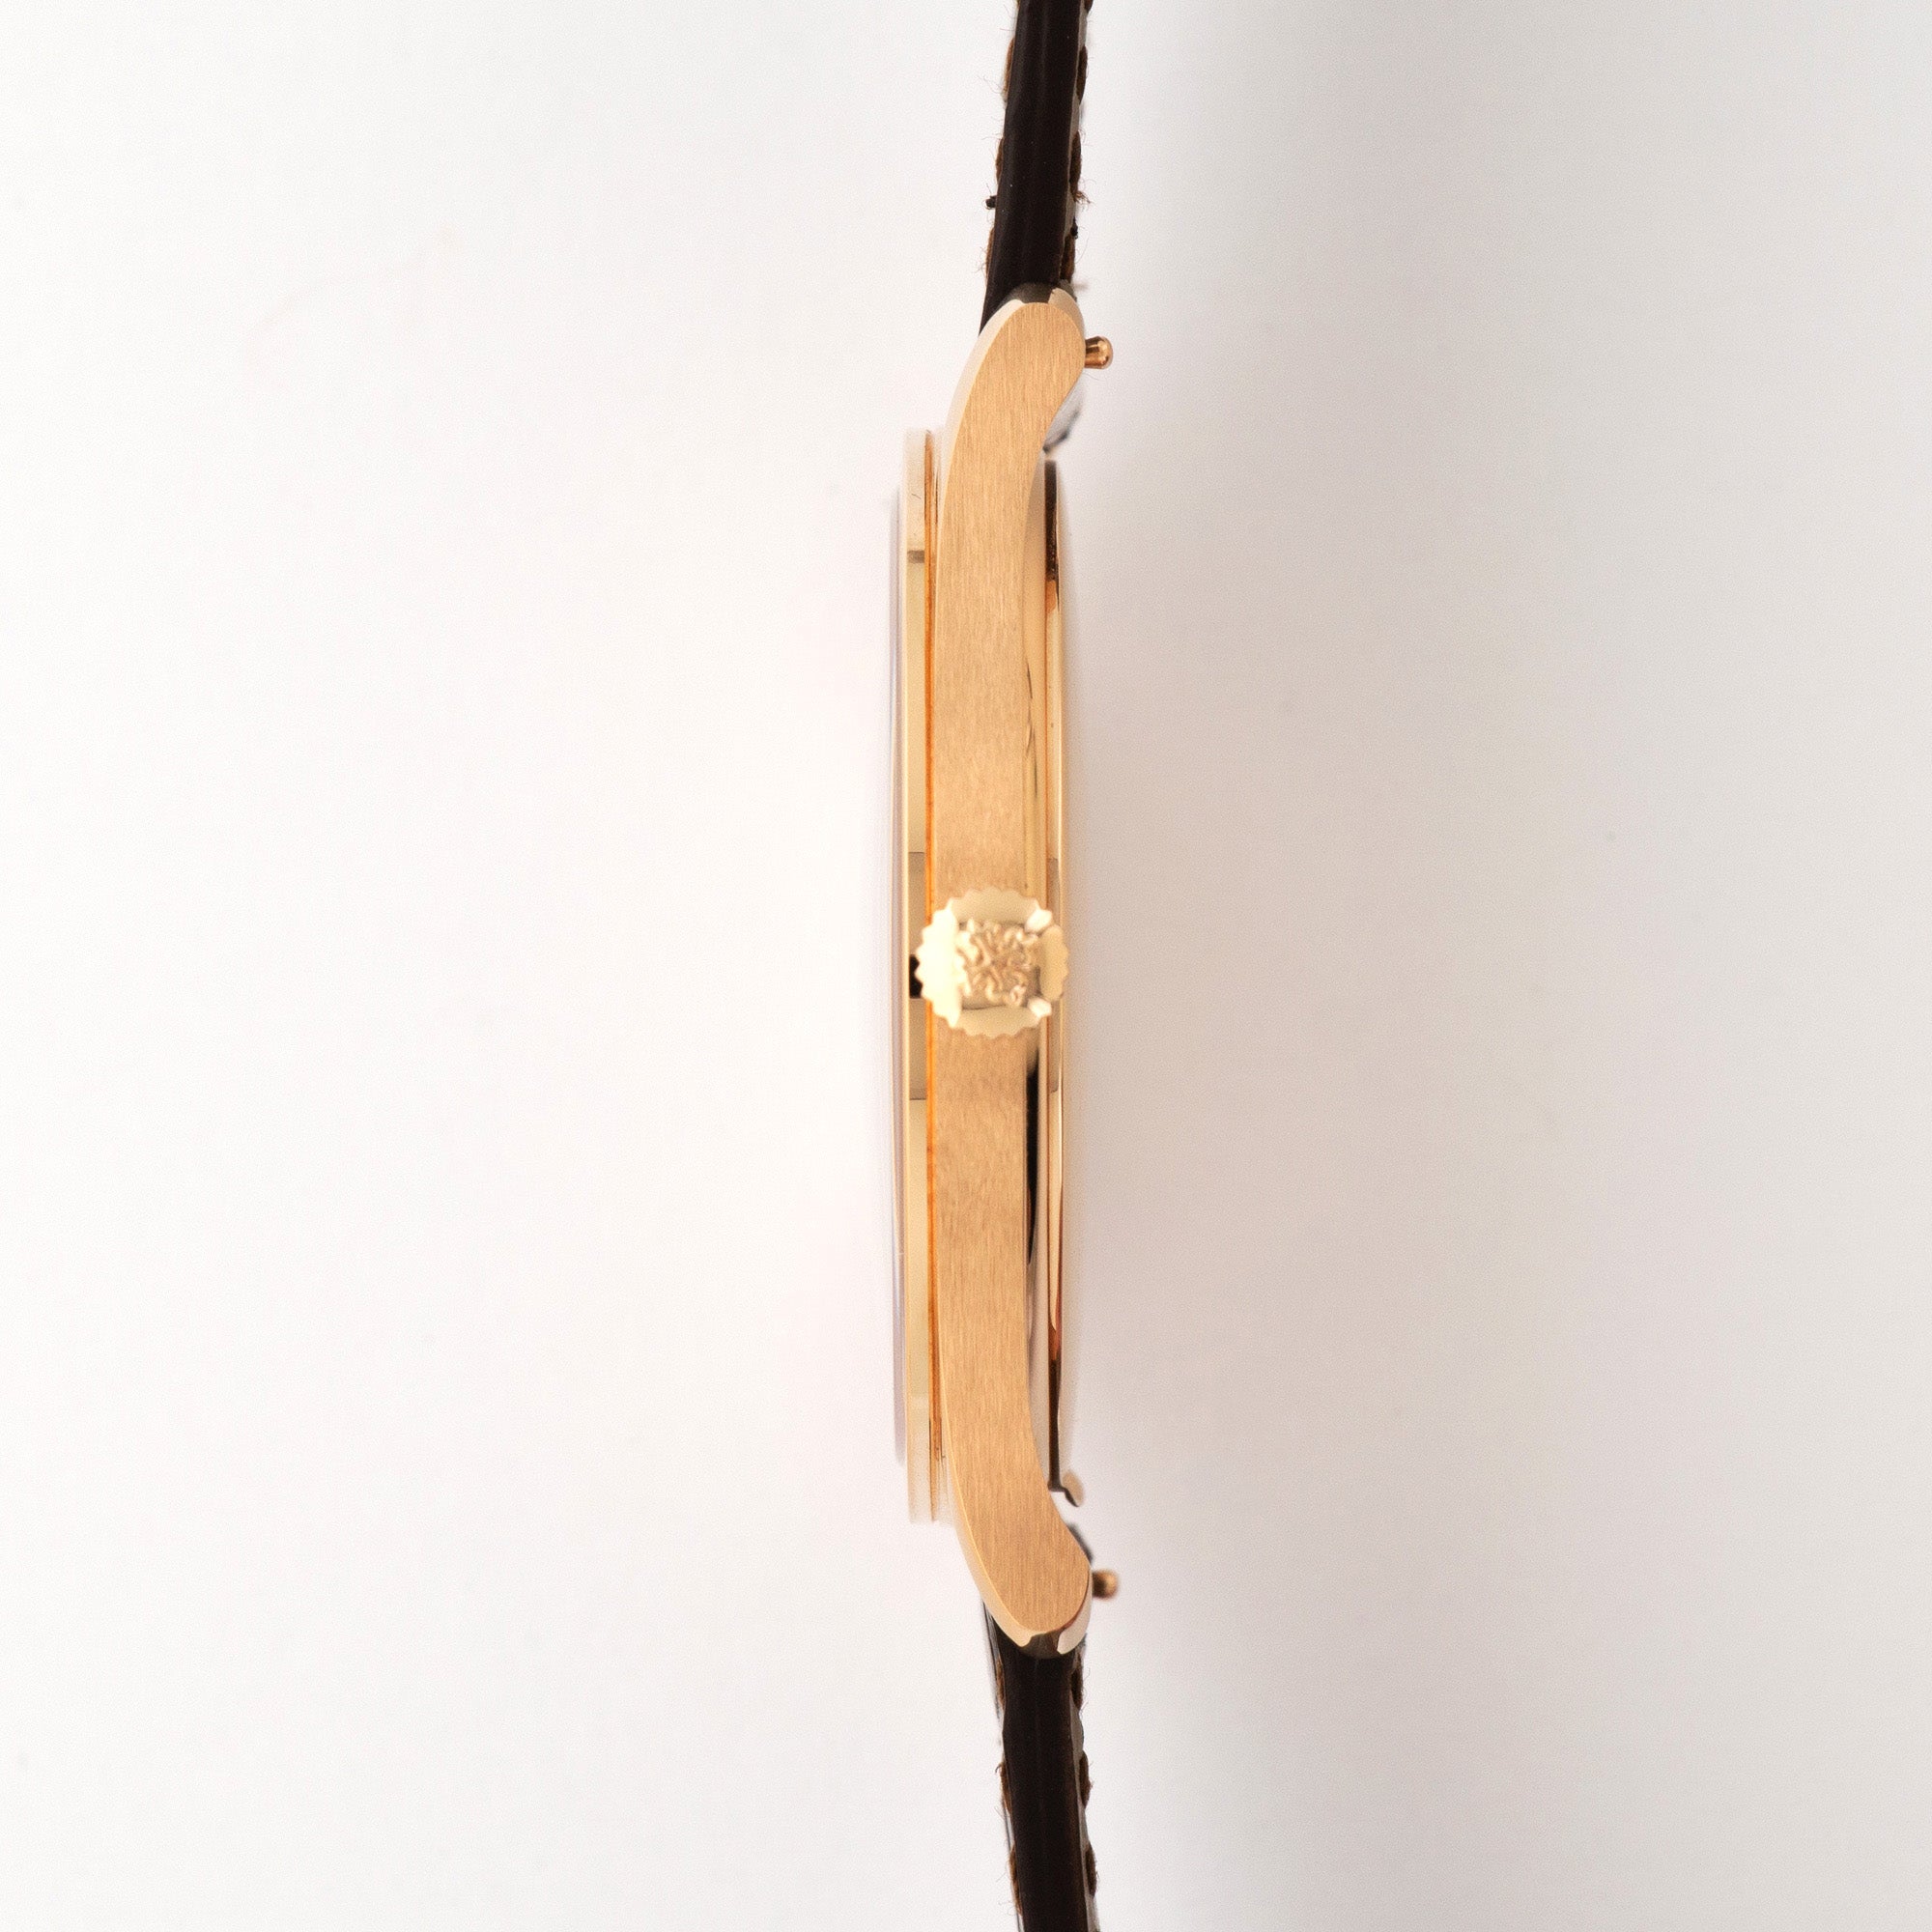 Patek Philippe - Patek Philippe Rose Gold Calatrava Ref. 5196 - The Keystone Watches